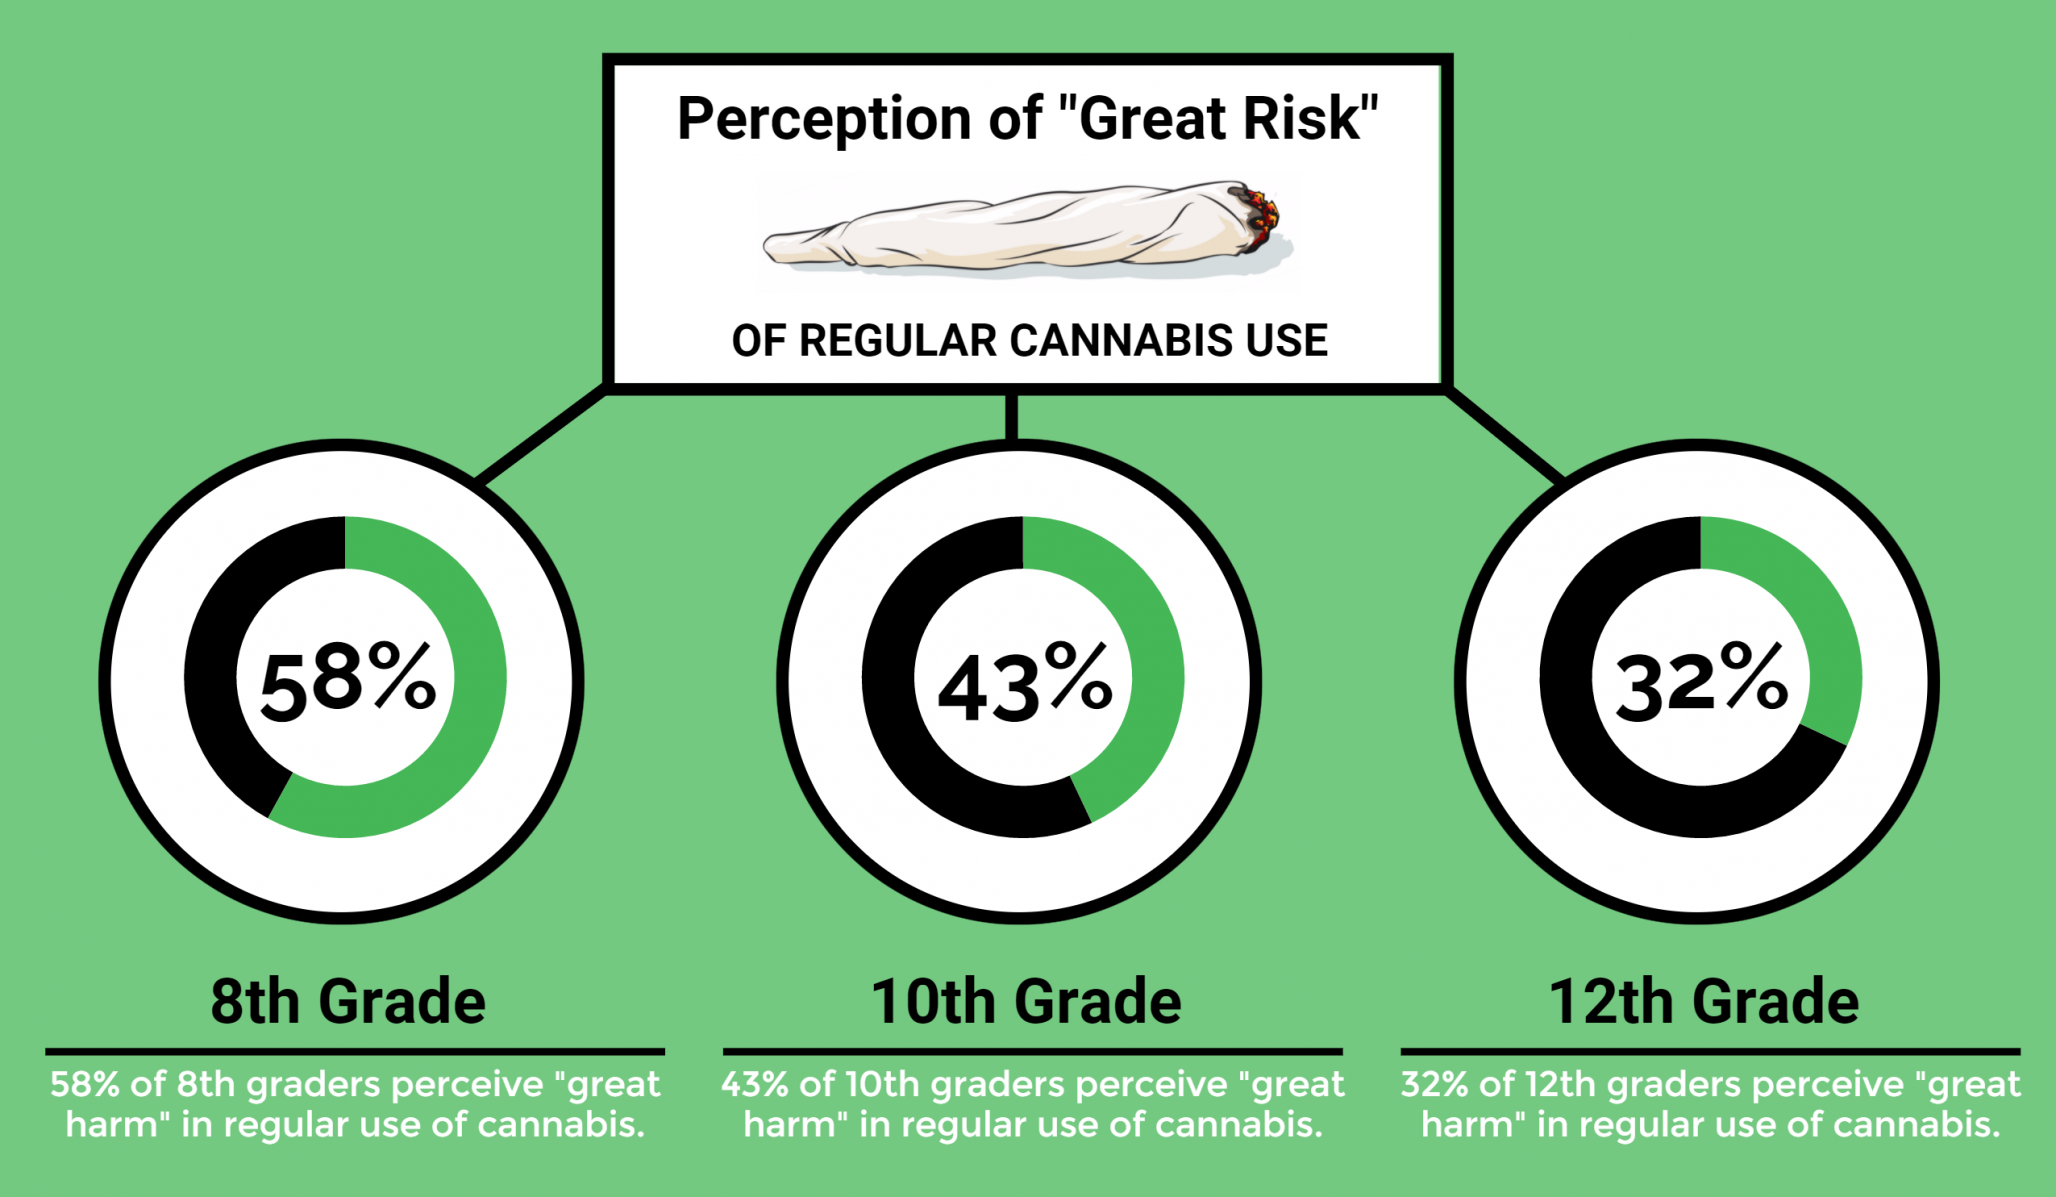 58% of 8th graders, 43% of 10th graders, and 32% of 12th graders perceive harm in regular marijuana use.